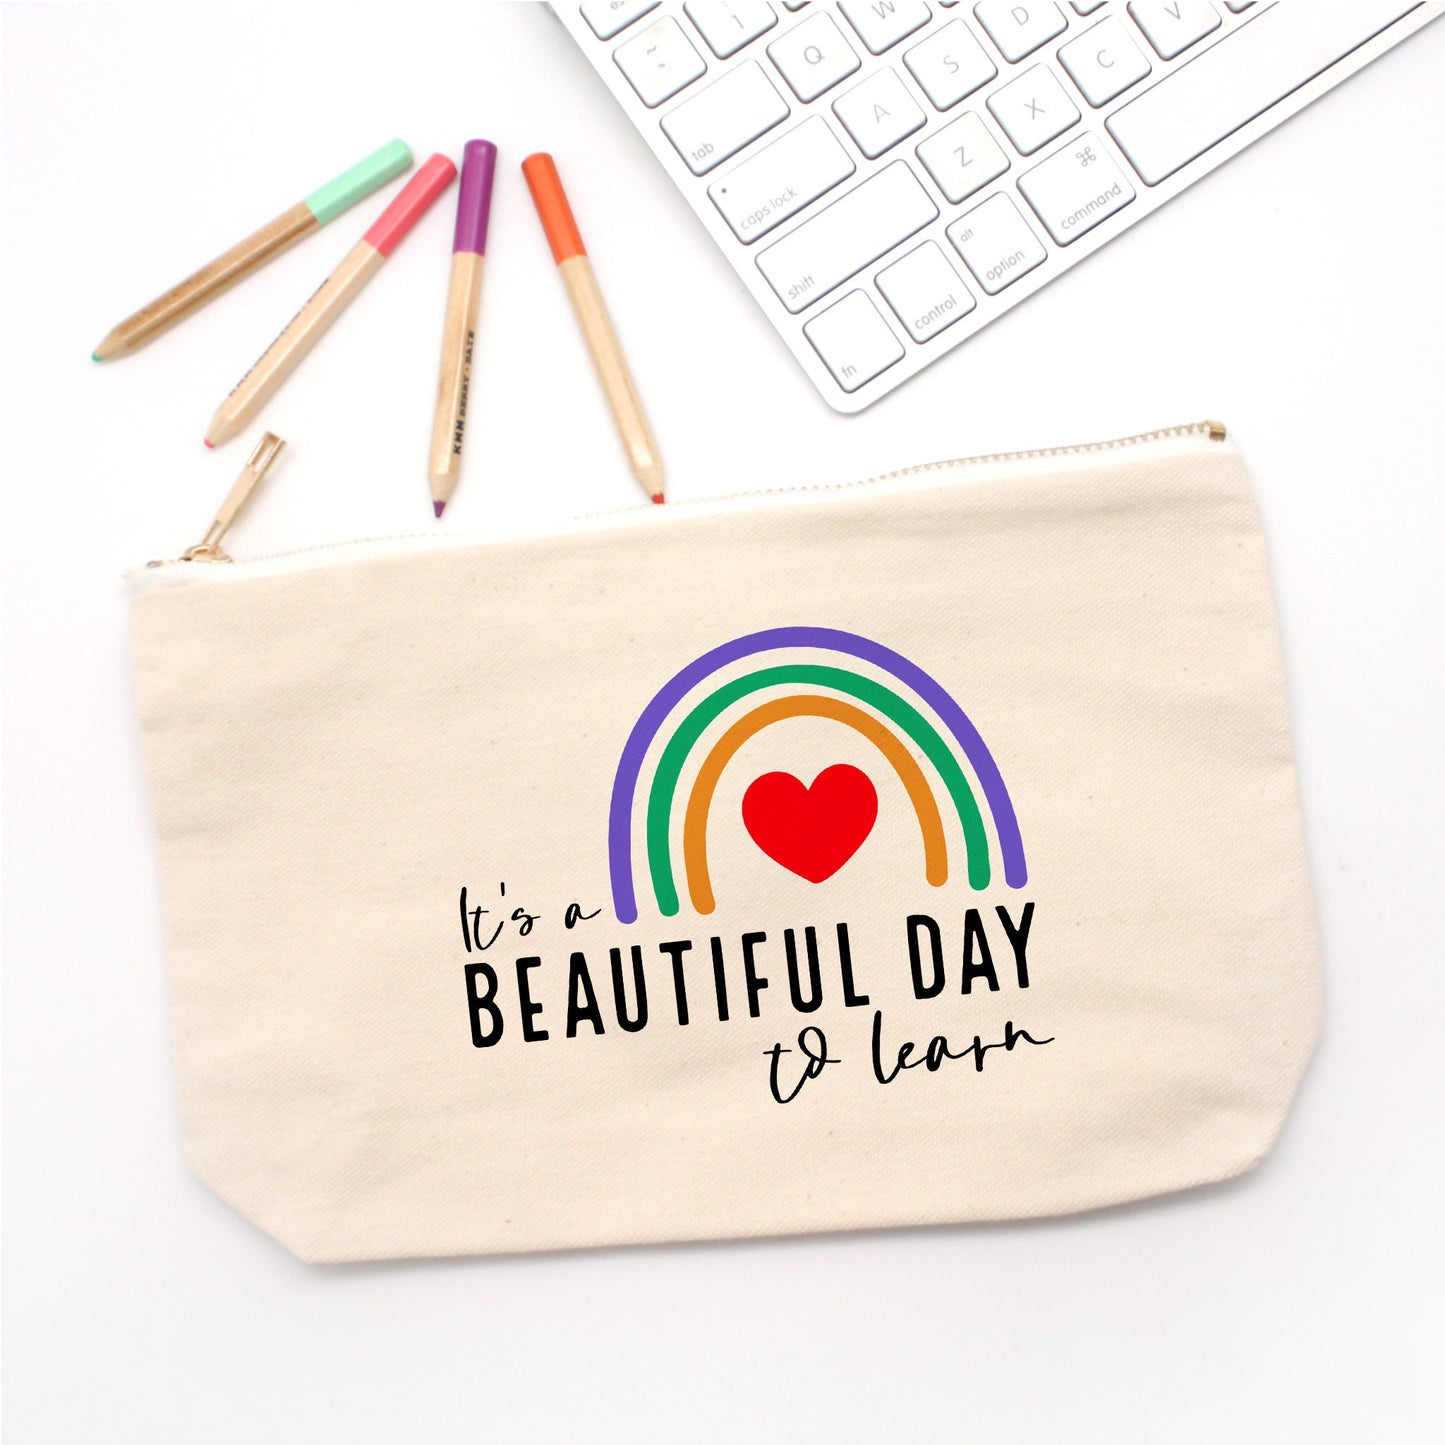 Teacher Gift - It's A Beautiful Day to Learn Pencil Bag - Canvas Penicil Bag - Pencil Bag - Cute Teacher Gift - Gift for Teachers - Pencils